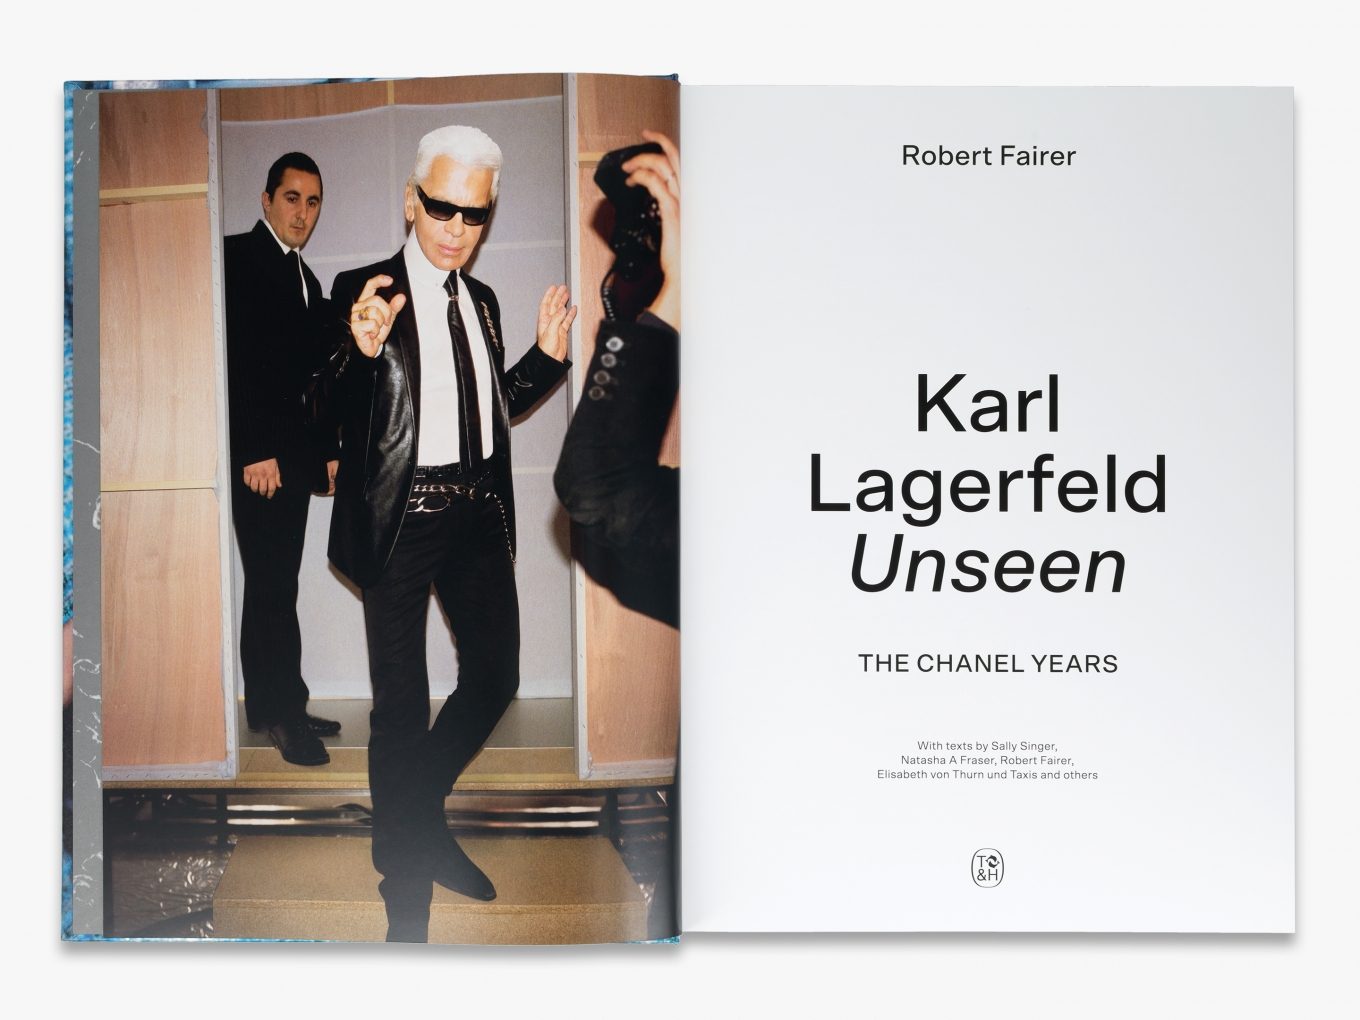 Karl Lagerfeld Unseen  Thames & Hudson Australia & New Zealand